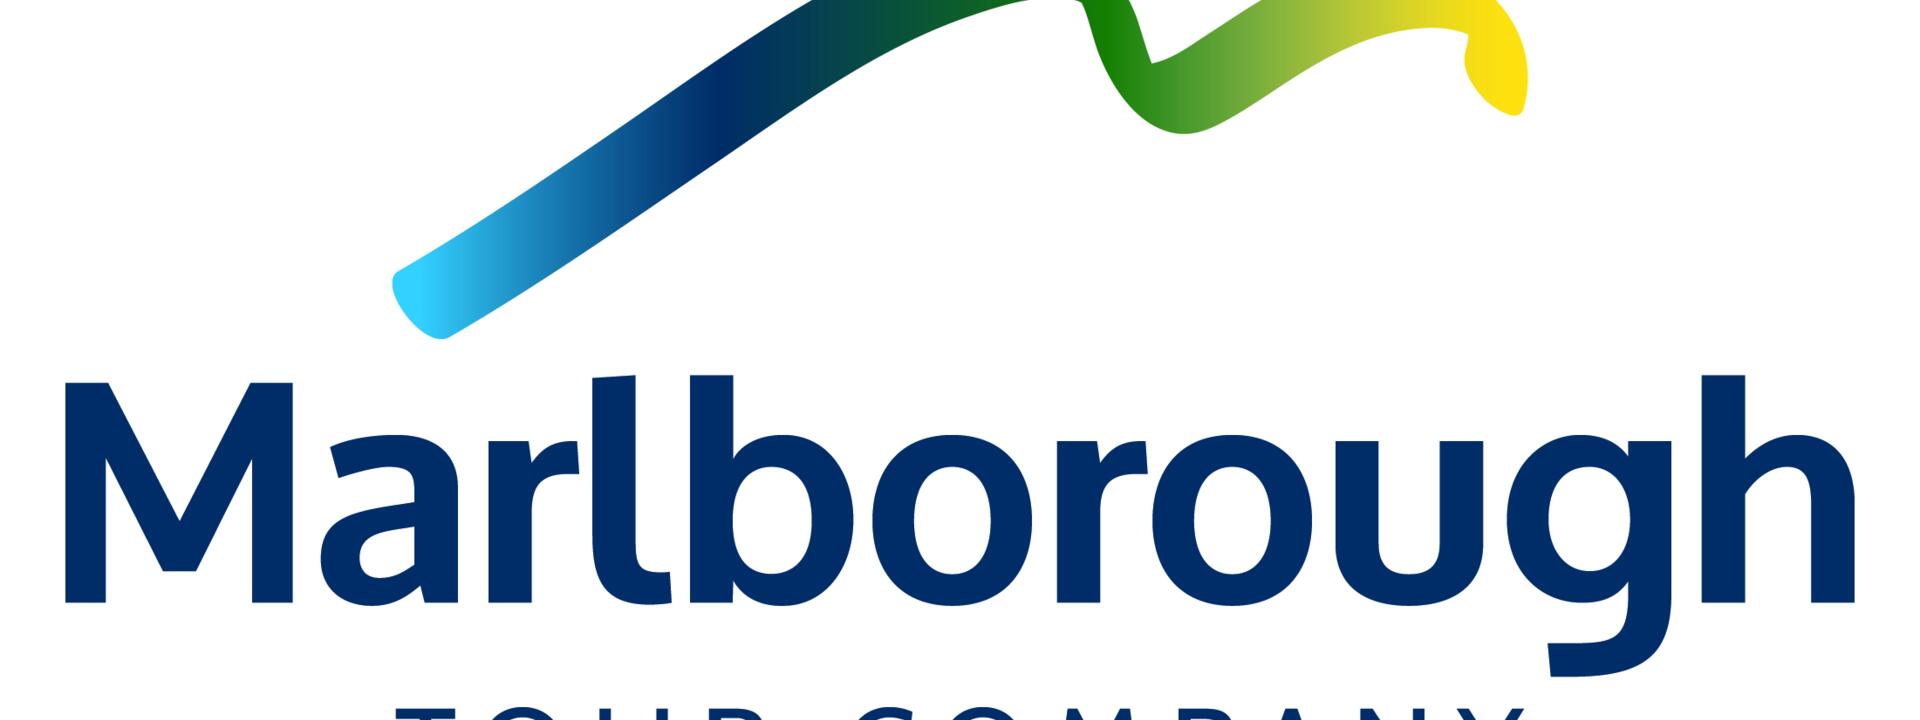 The Marlborough tour company logo